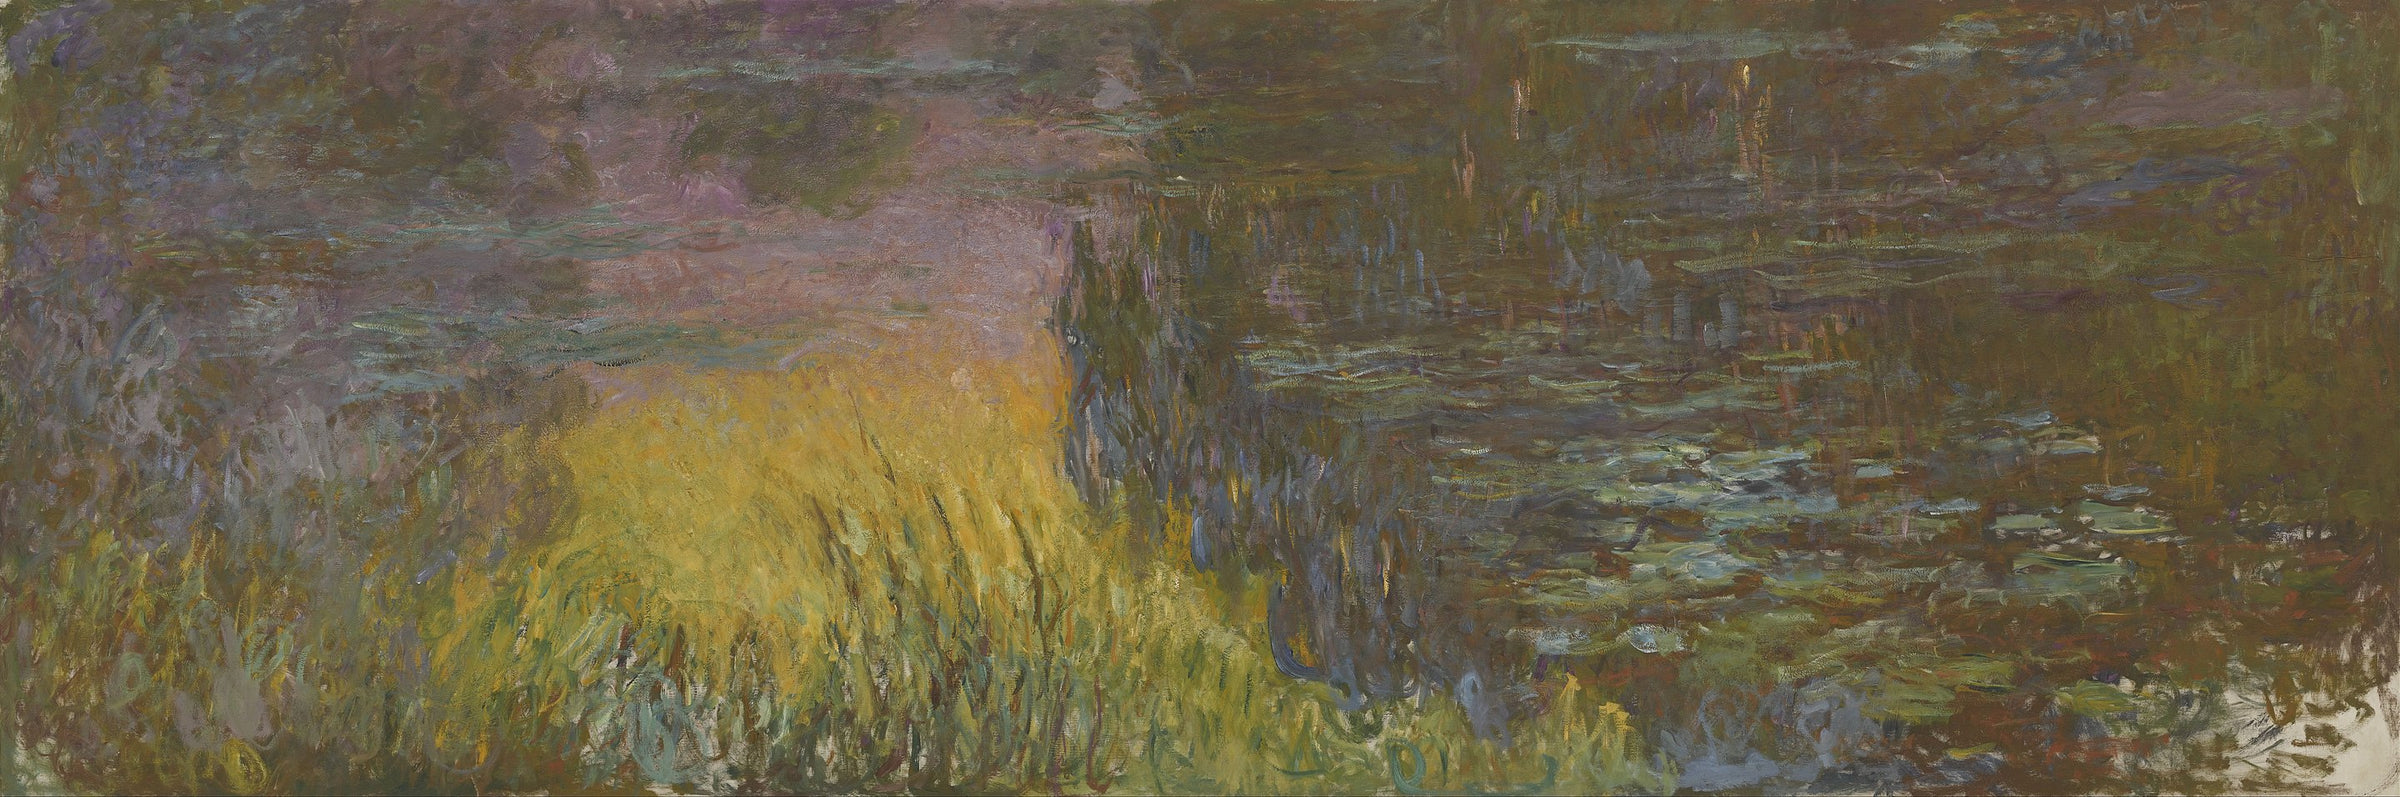 Water Lilies (Monet series)